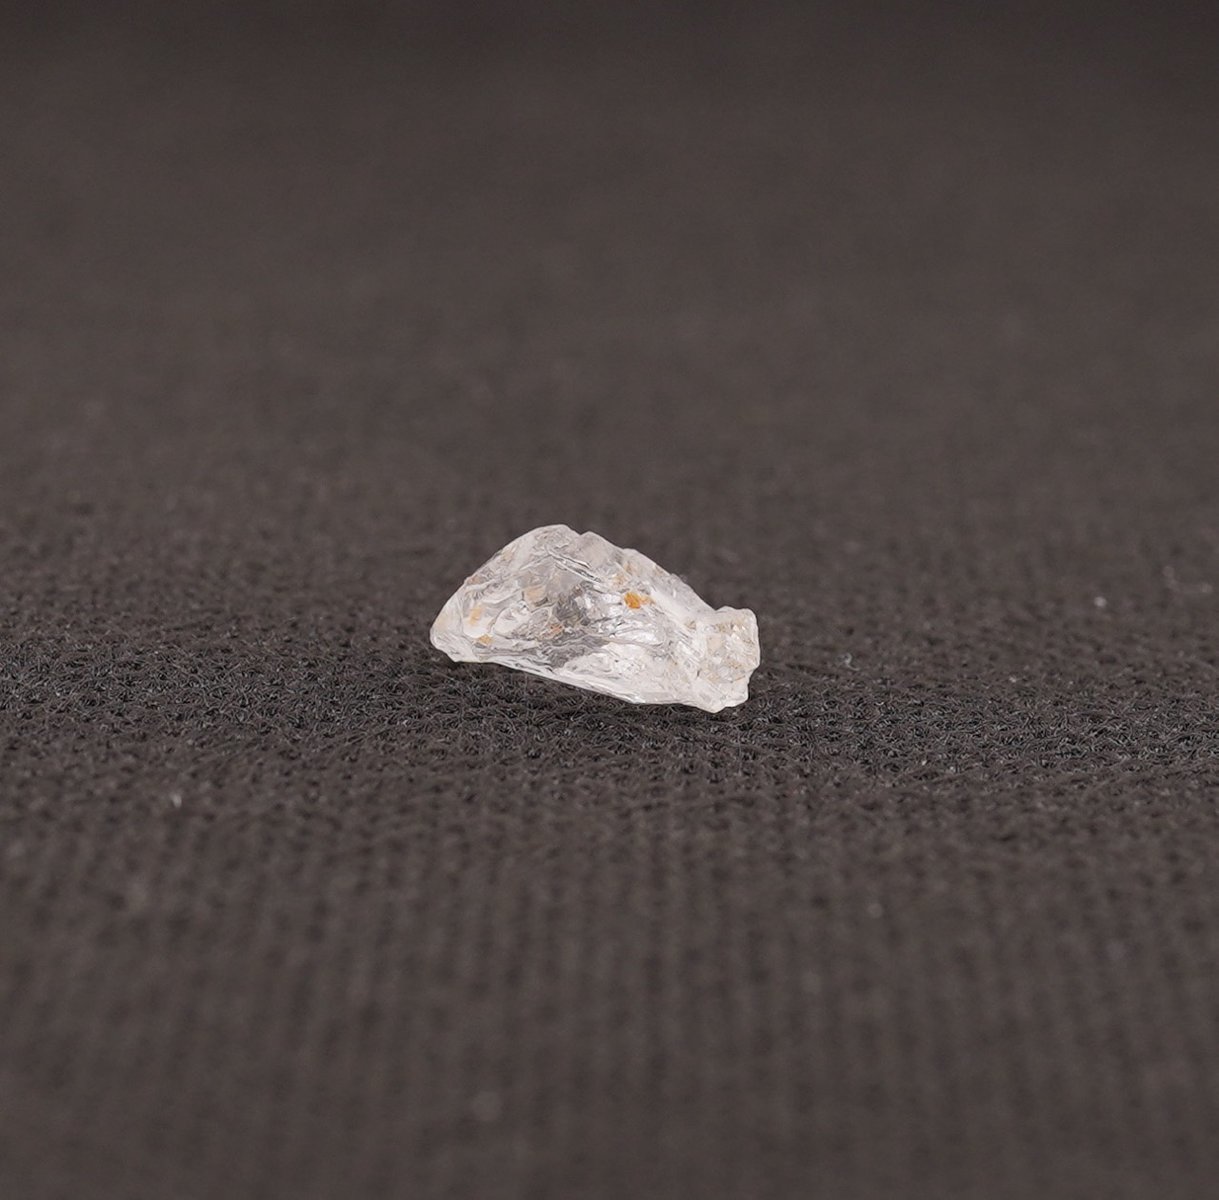 Fenacit nigerian cristal natural unicat f238